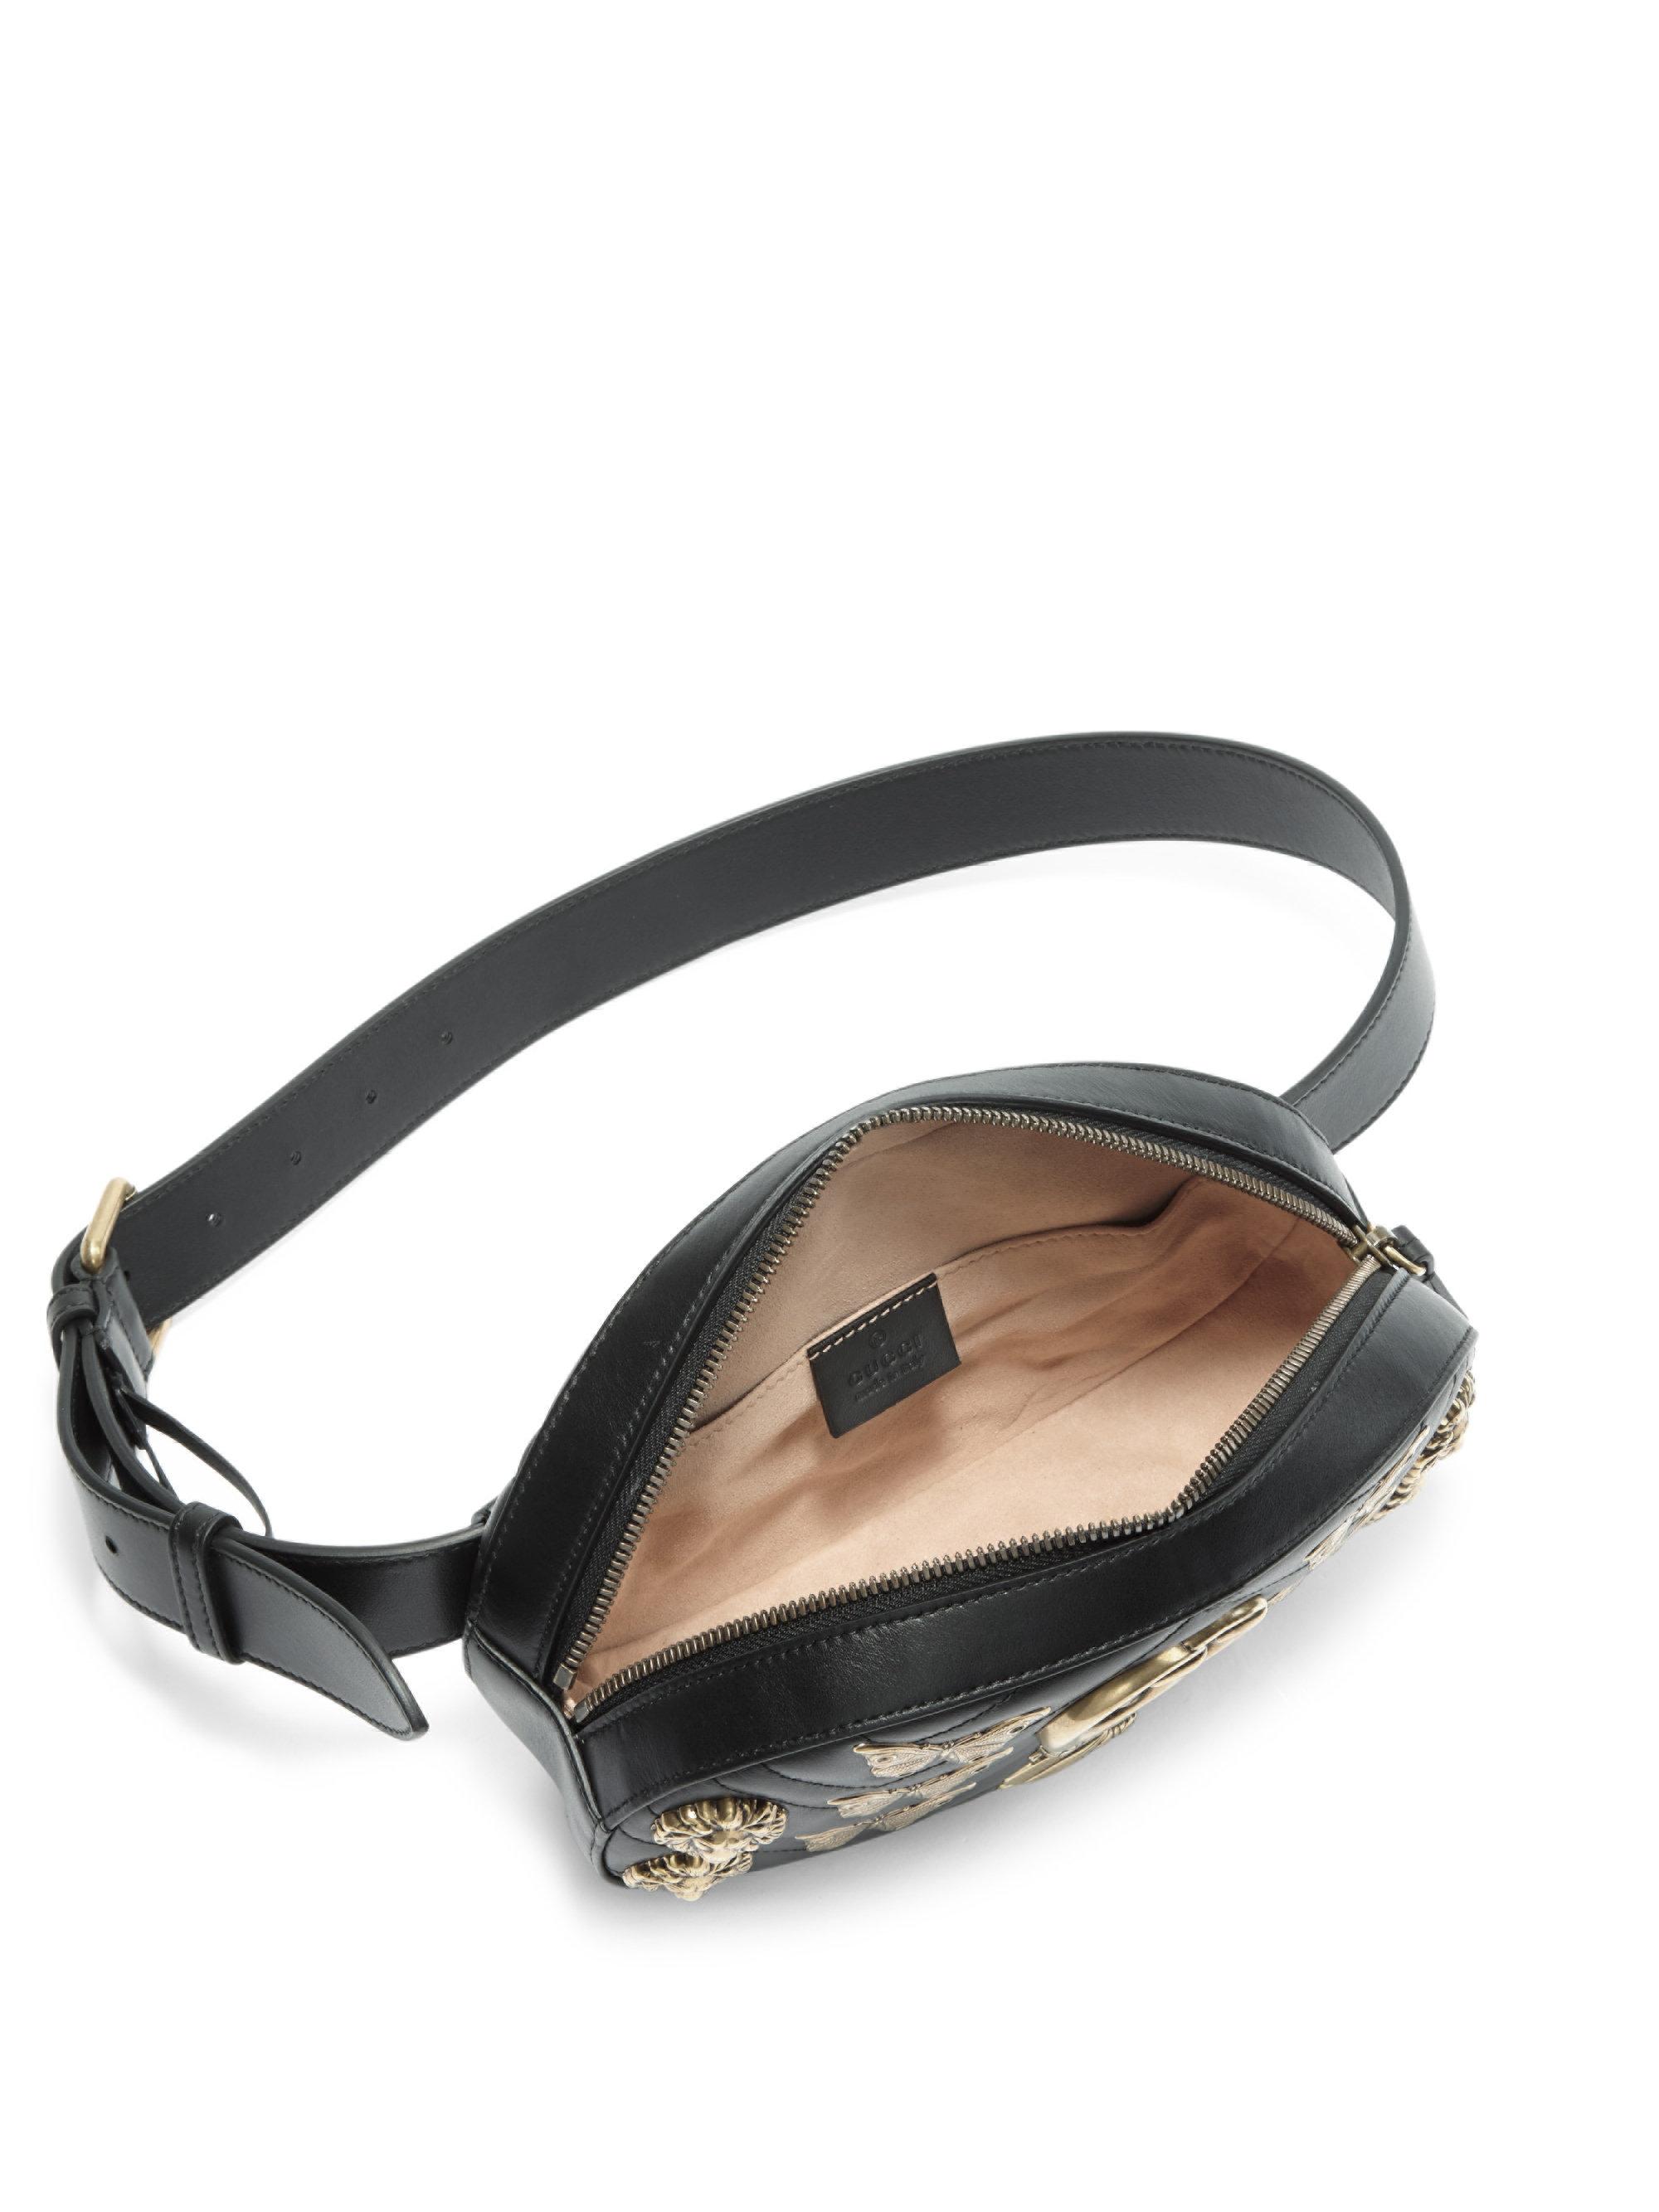 Gucci Medium Leather Belt Bag in Black - Lyst